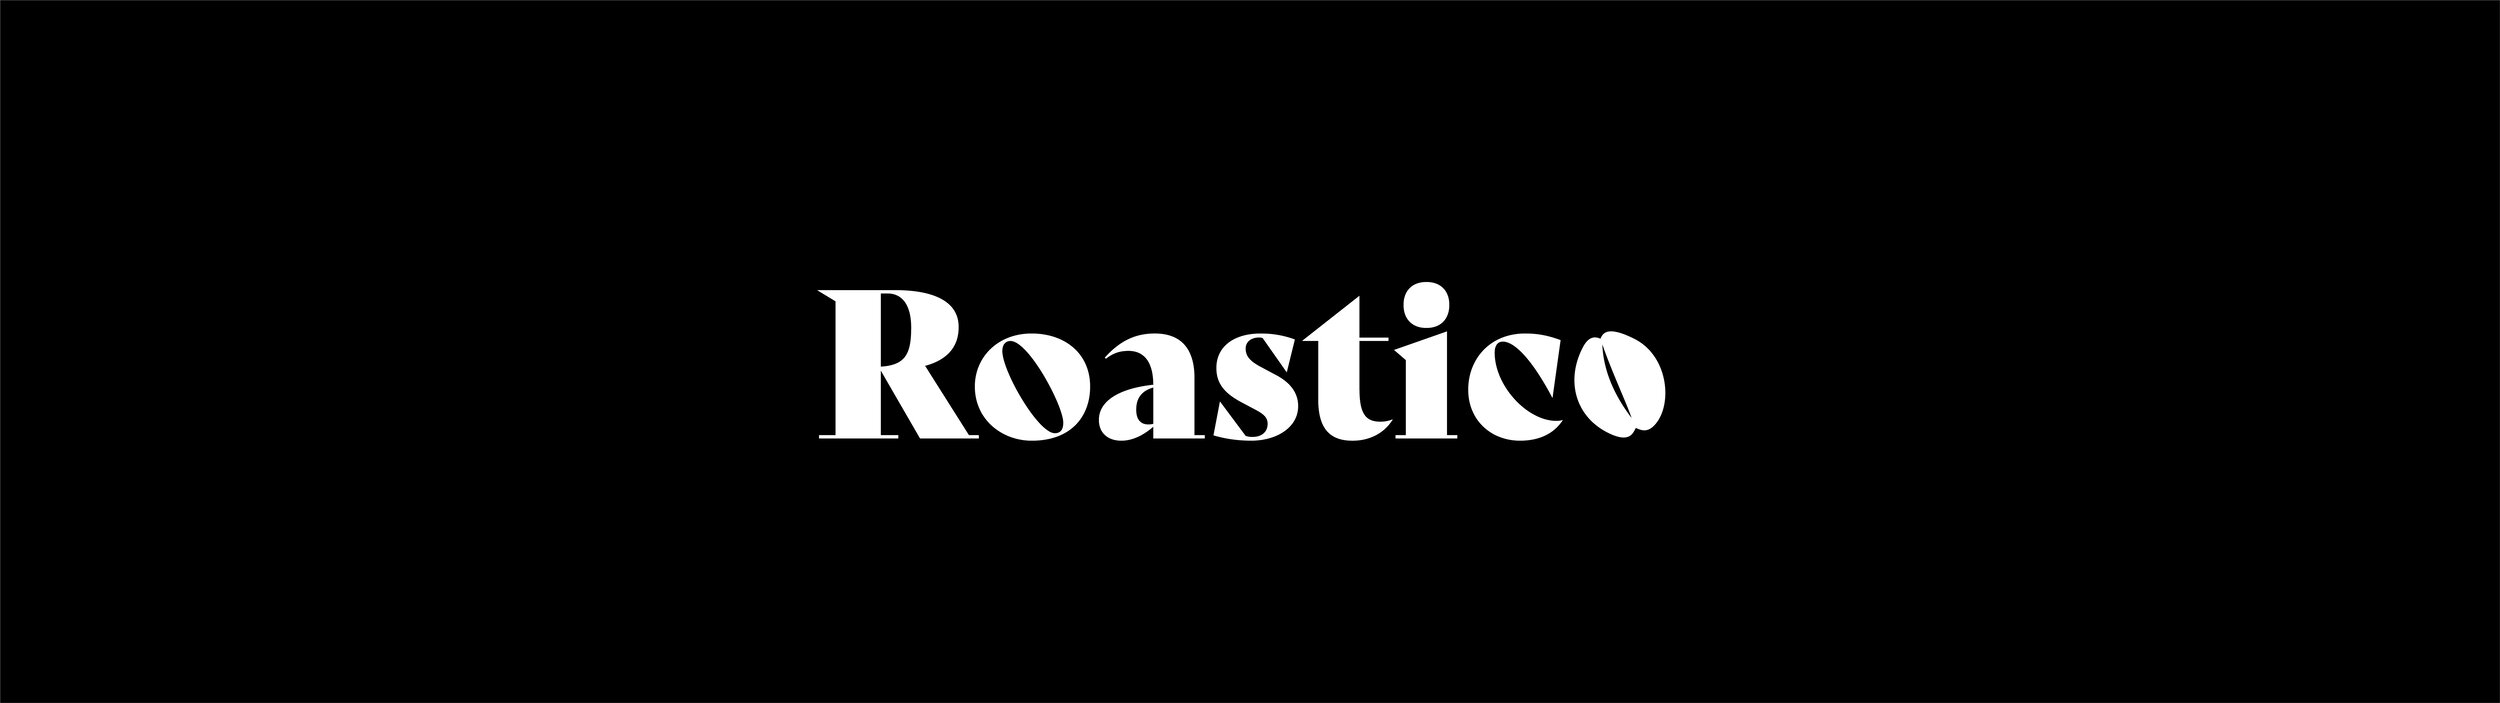 Roastico Brand-06.jpg